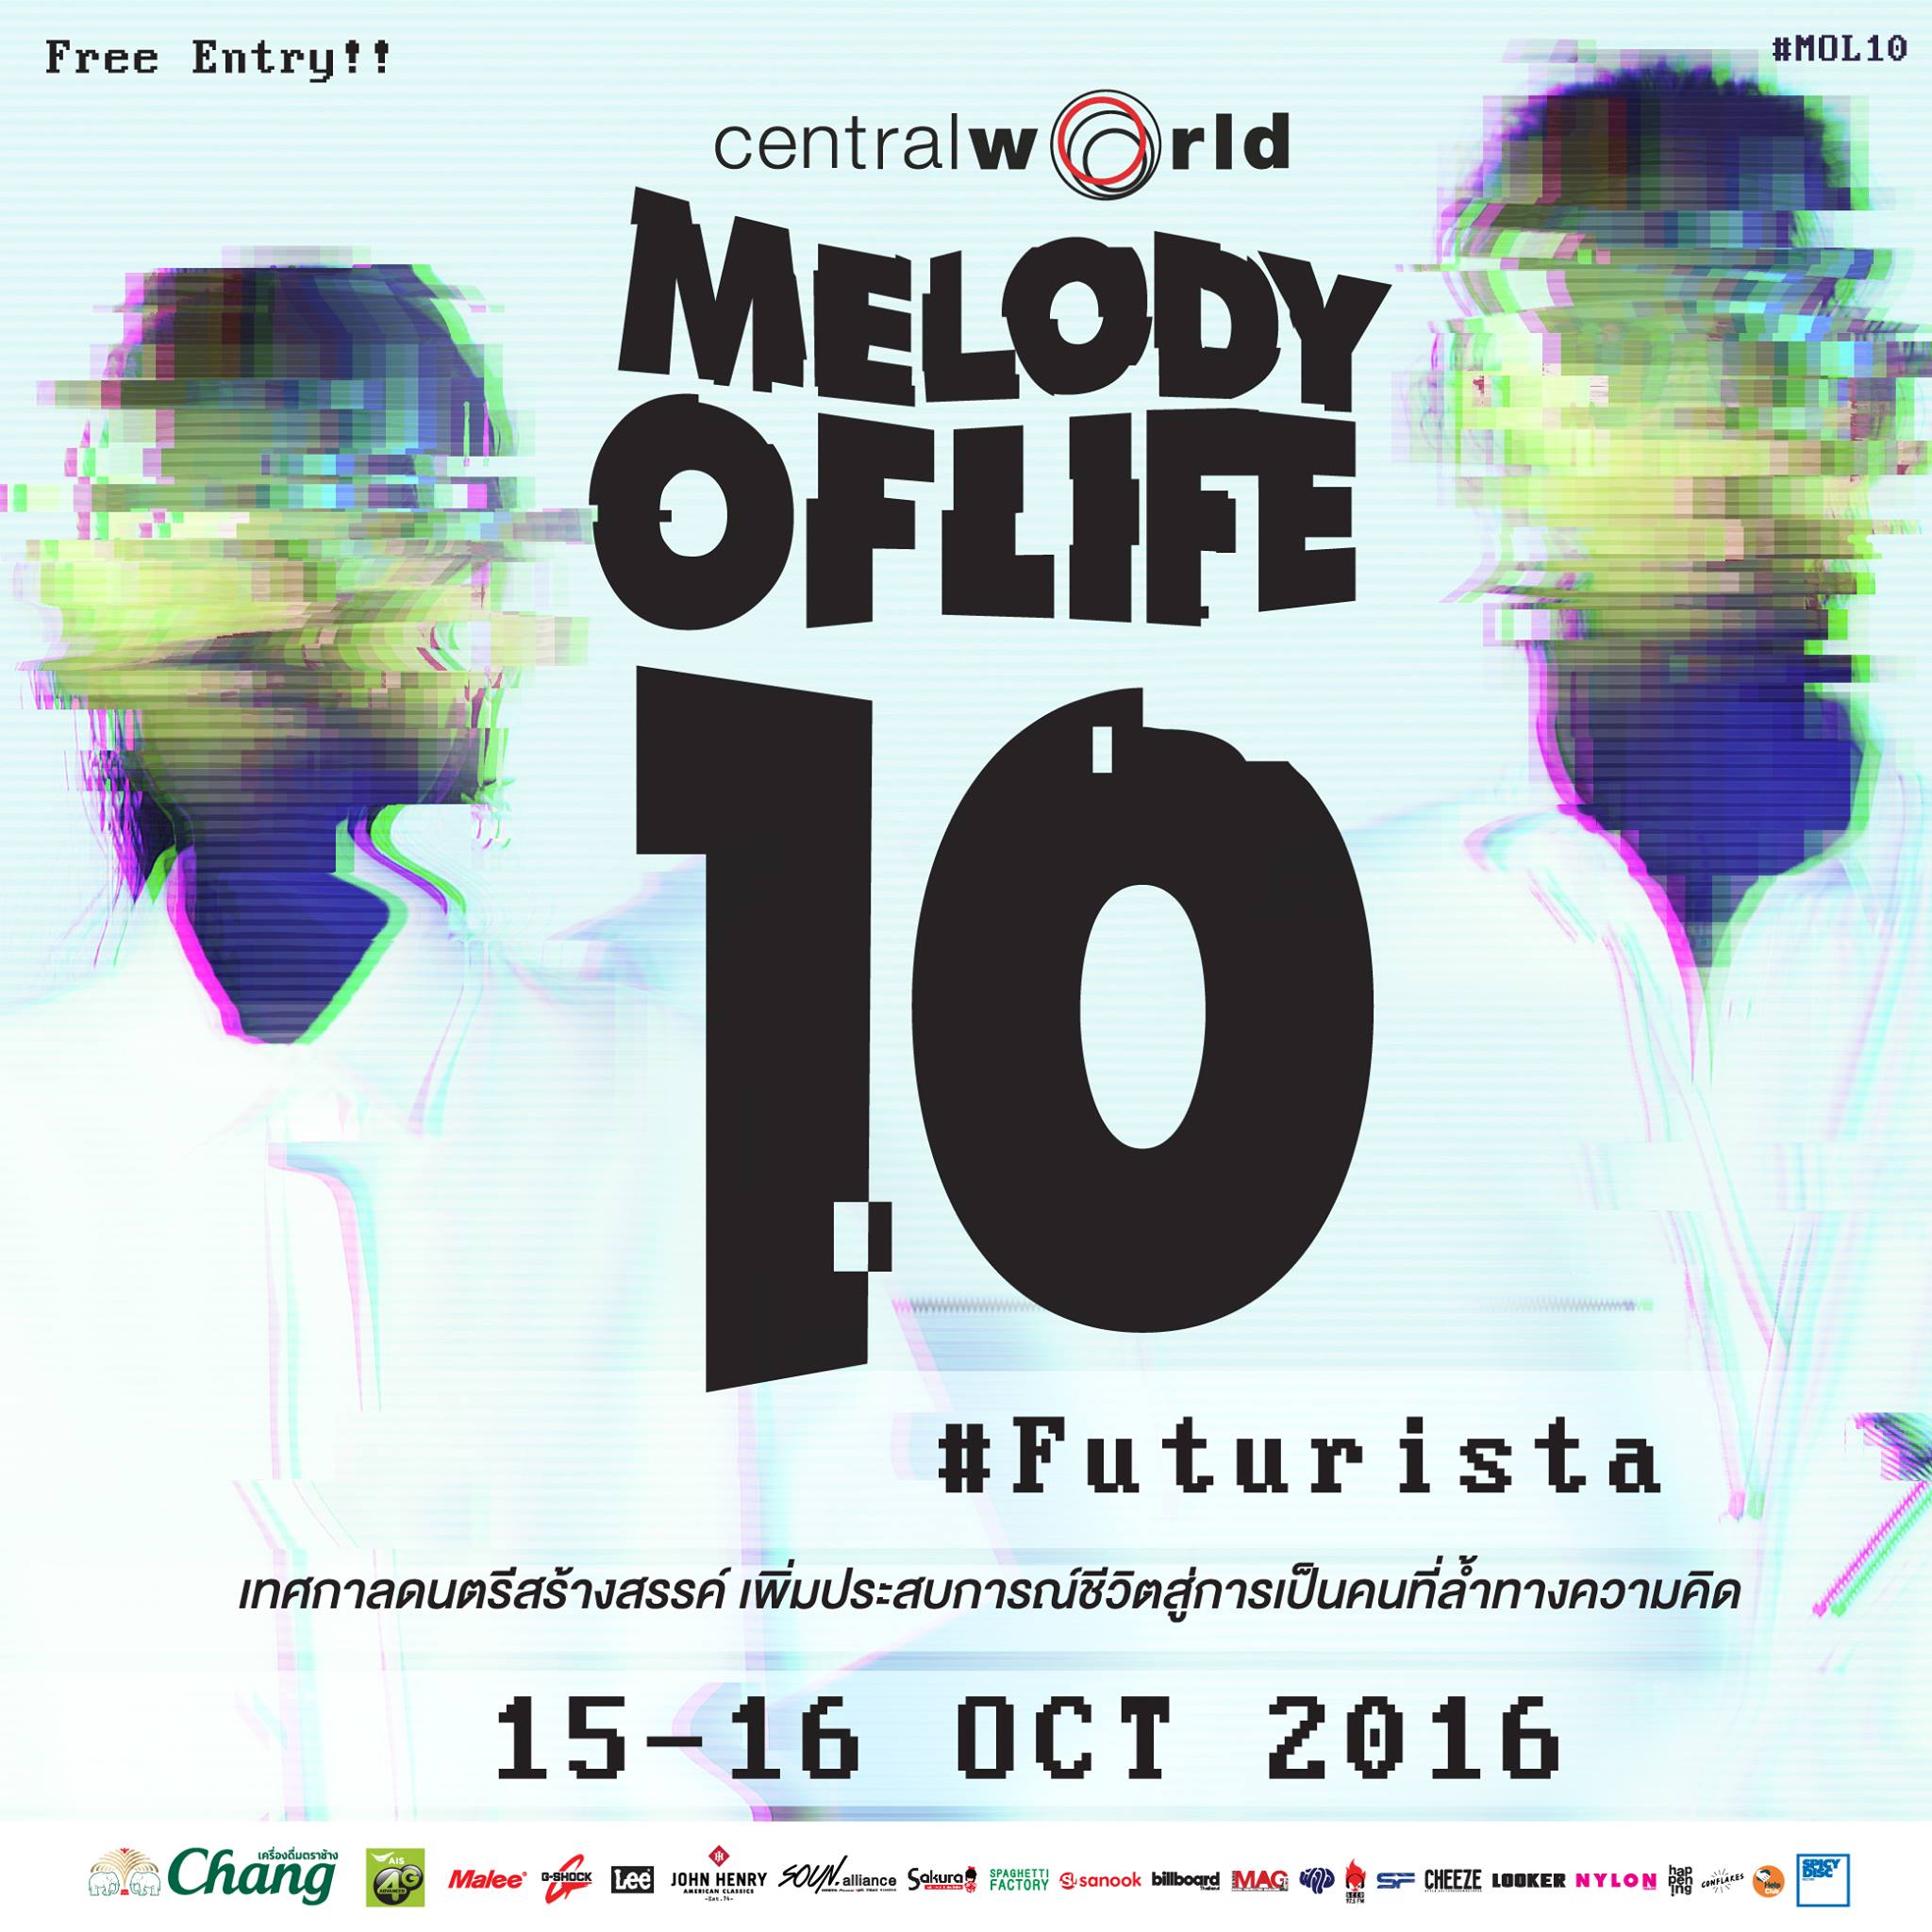 Melody of Life 10 #Futurista @ CentralWorld